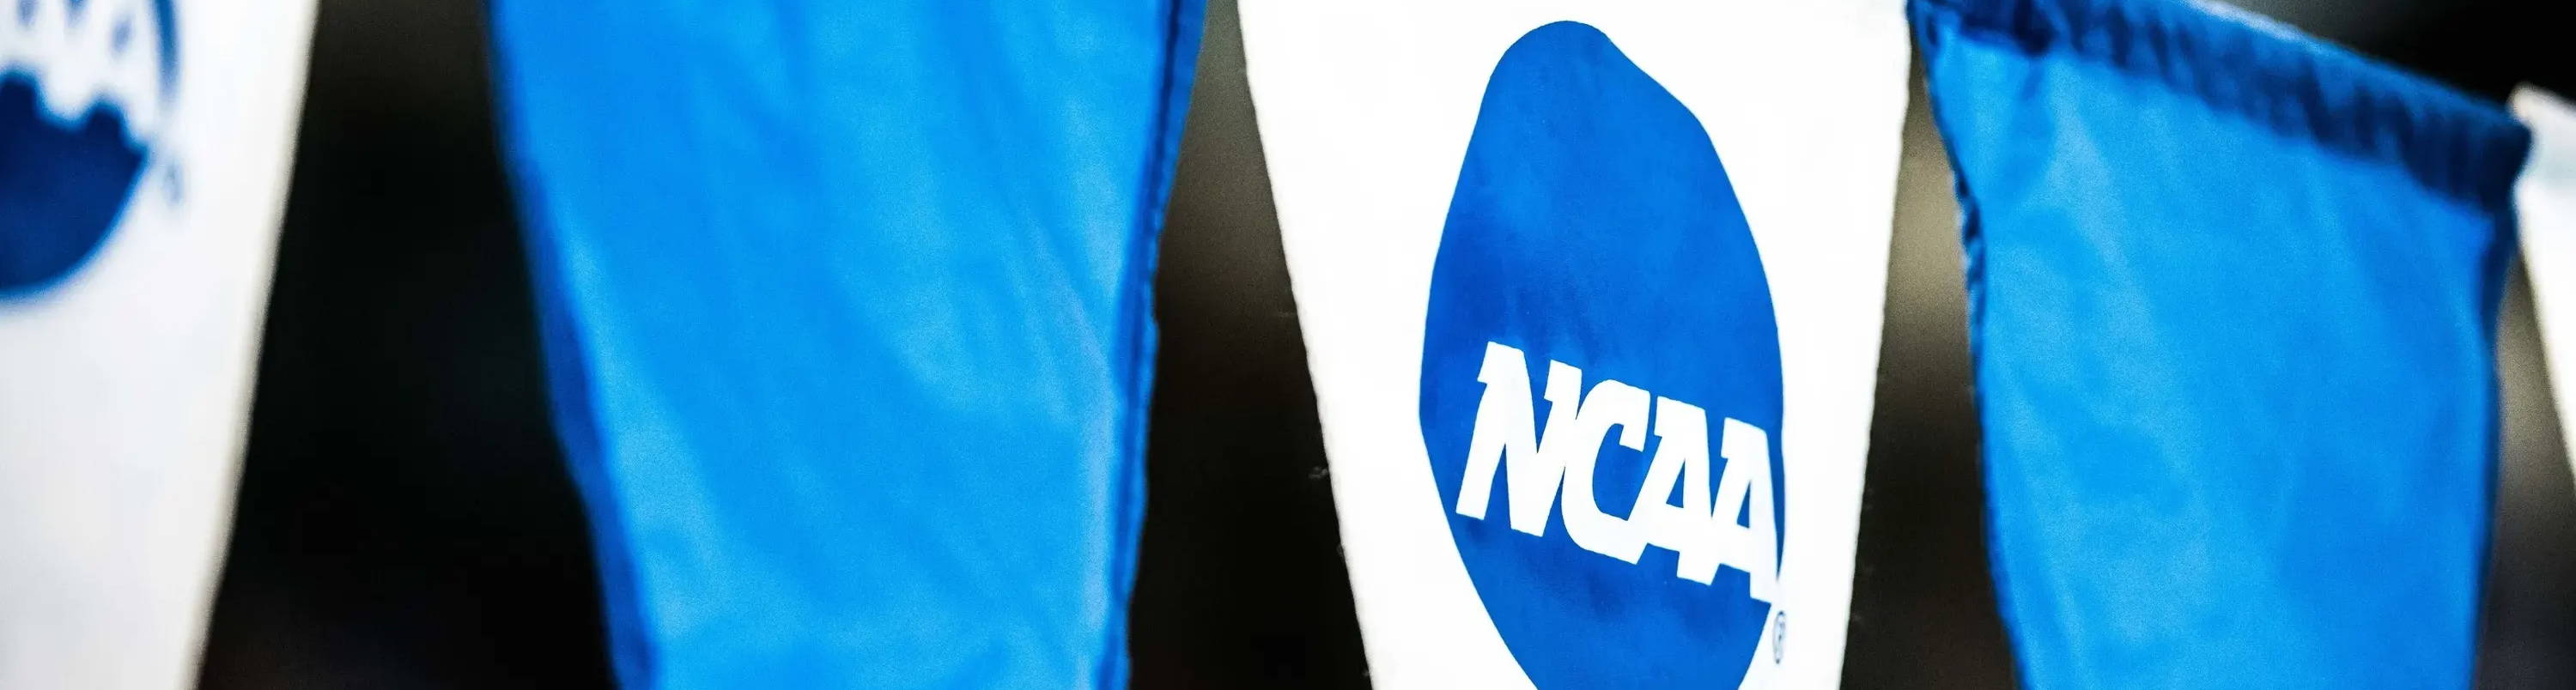 NCAA Logo on Banner